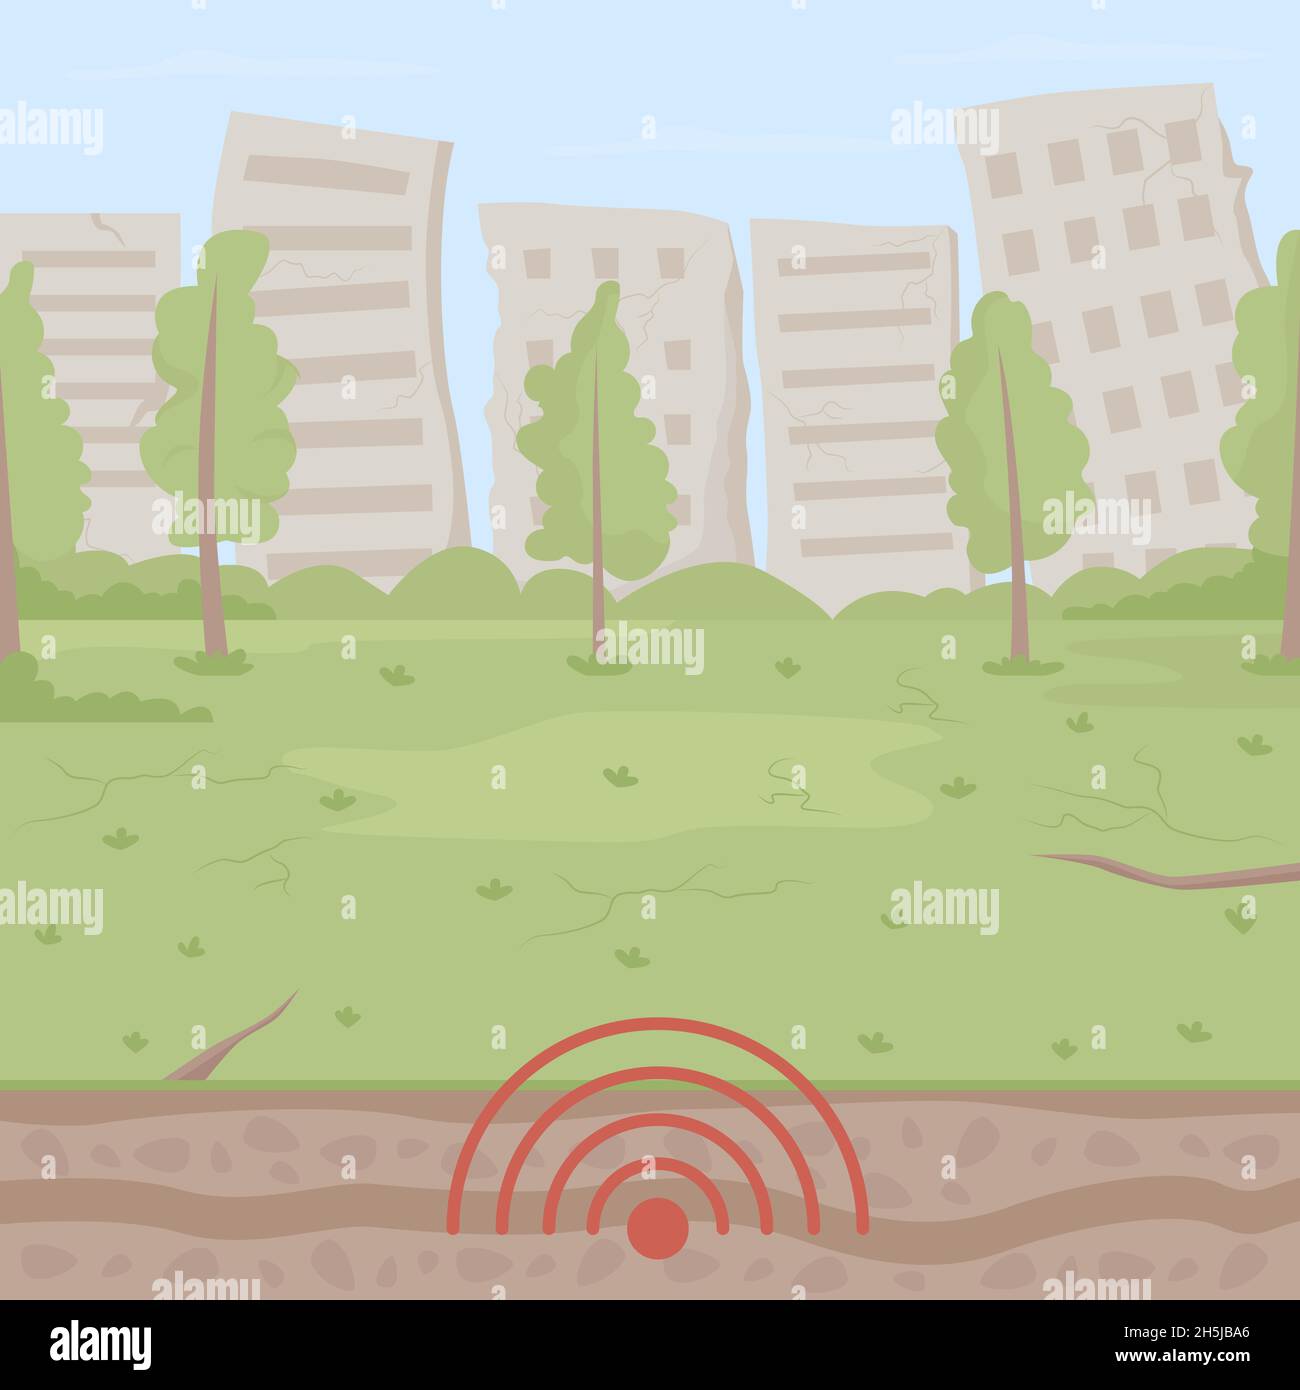 Earthquake activity in urban park flat color vector illustration Stock Vector